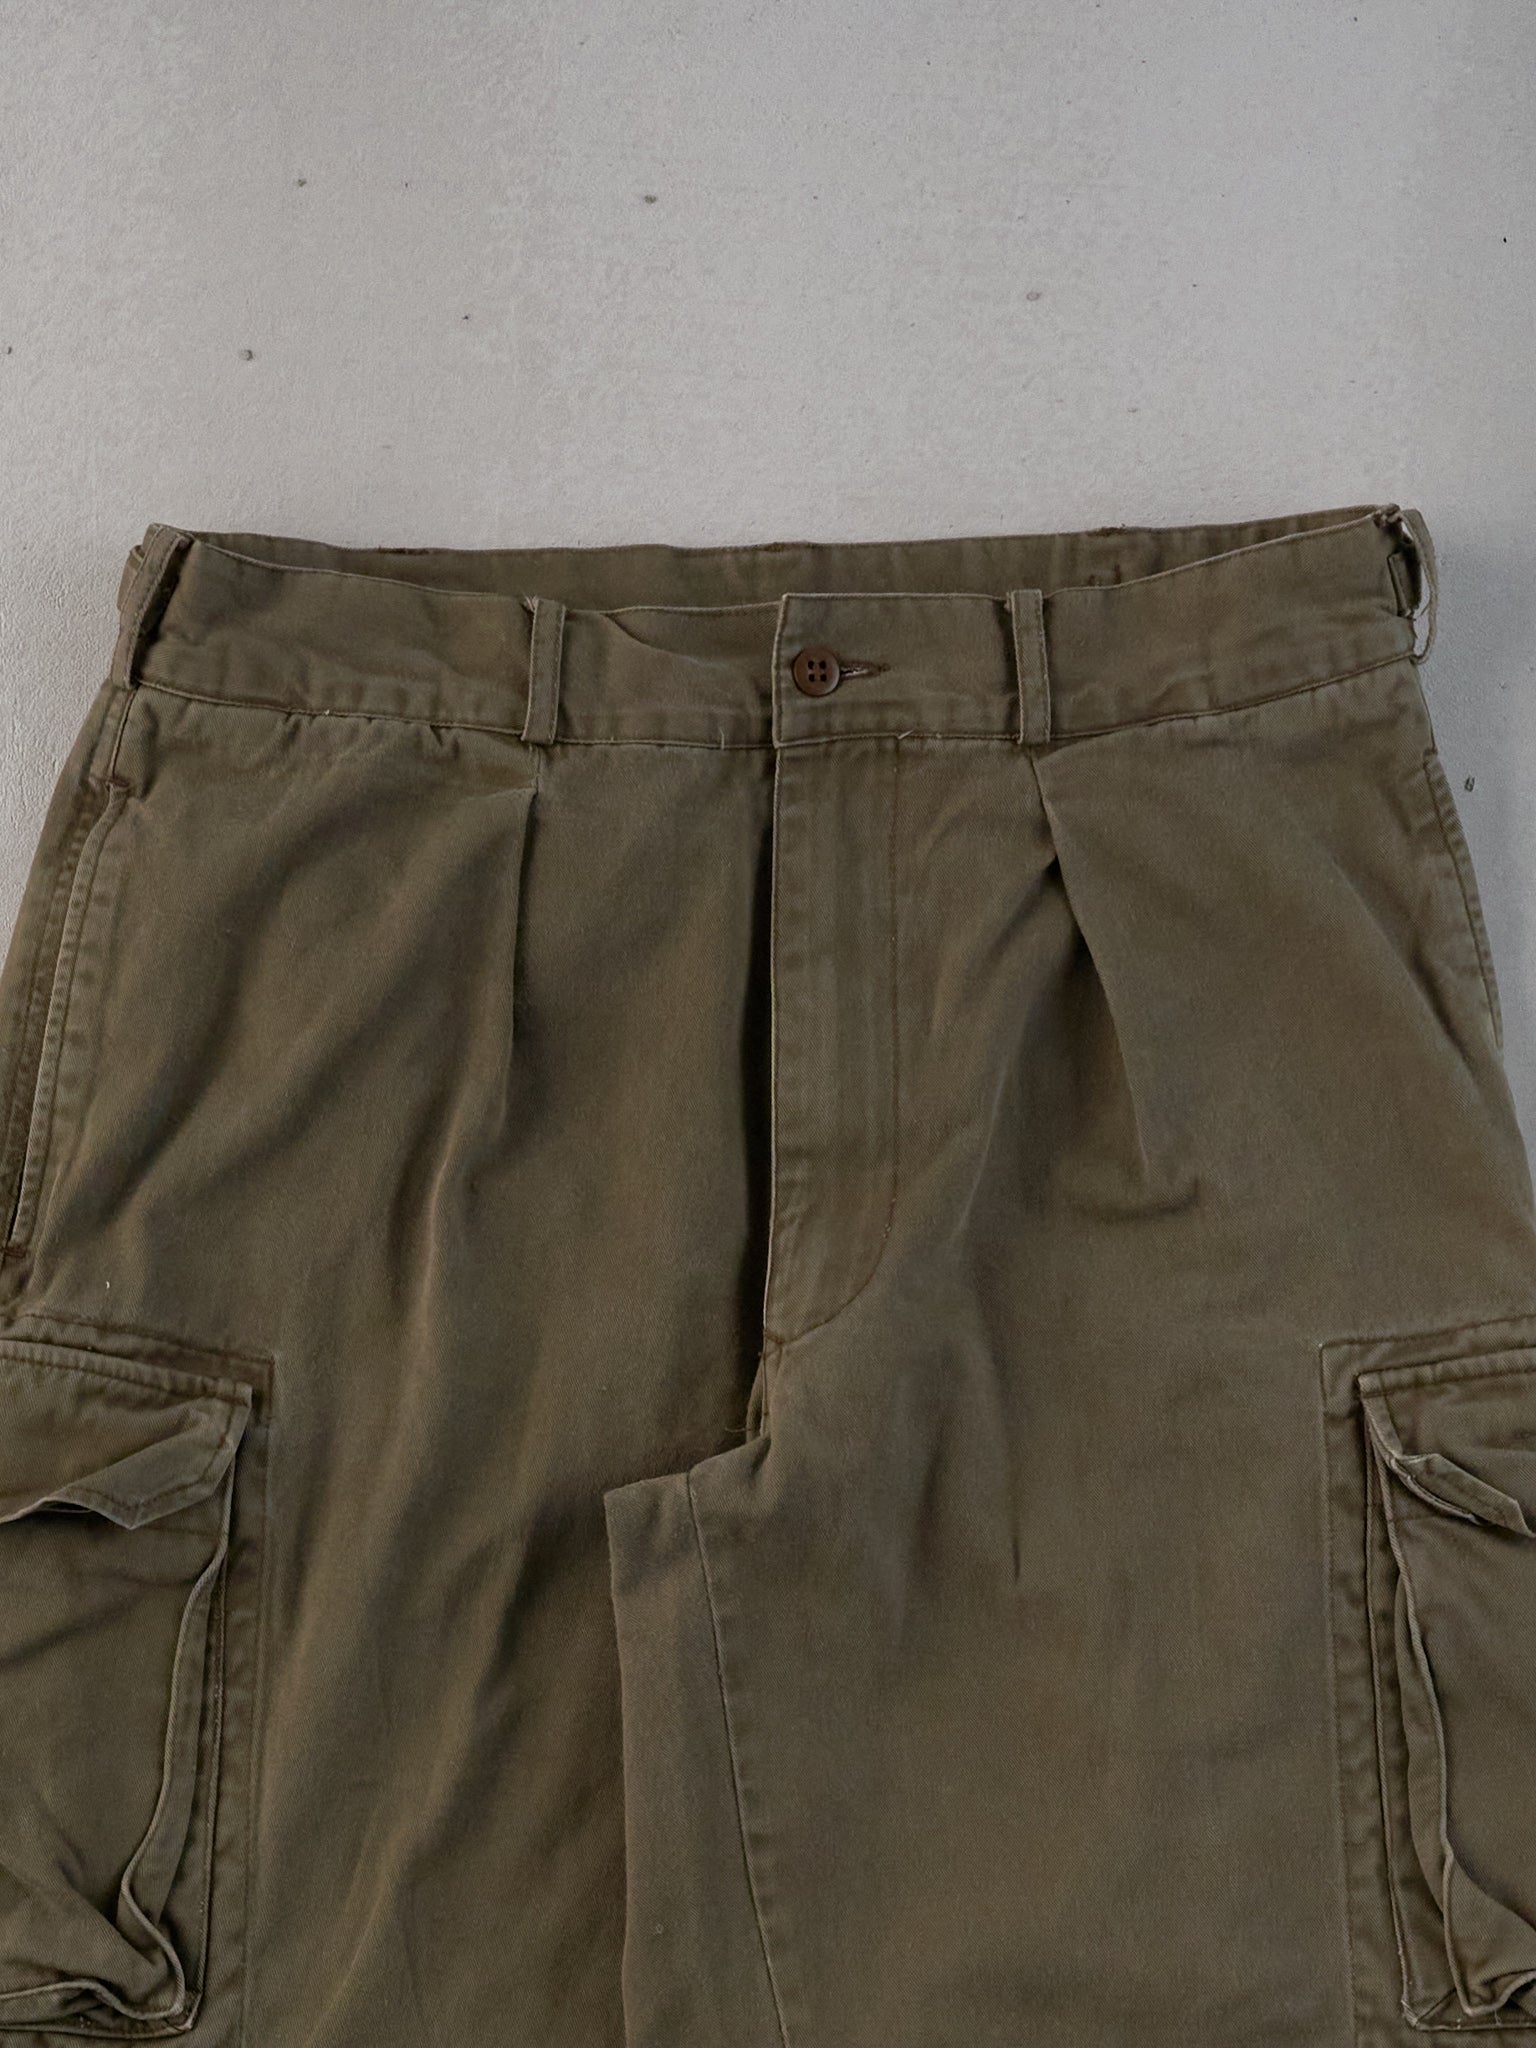 Vintage 90s Brown St Johns Bay Cargo Pants (33x30)